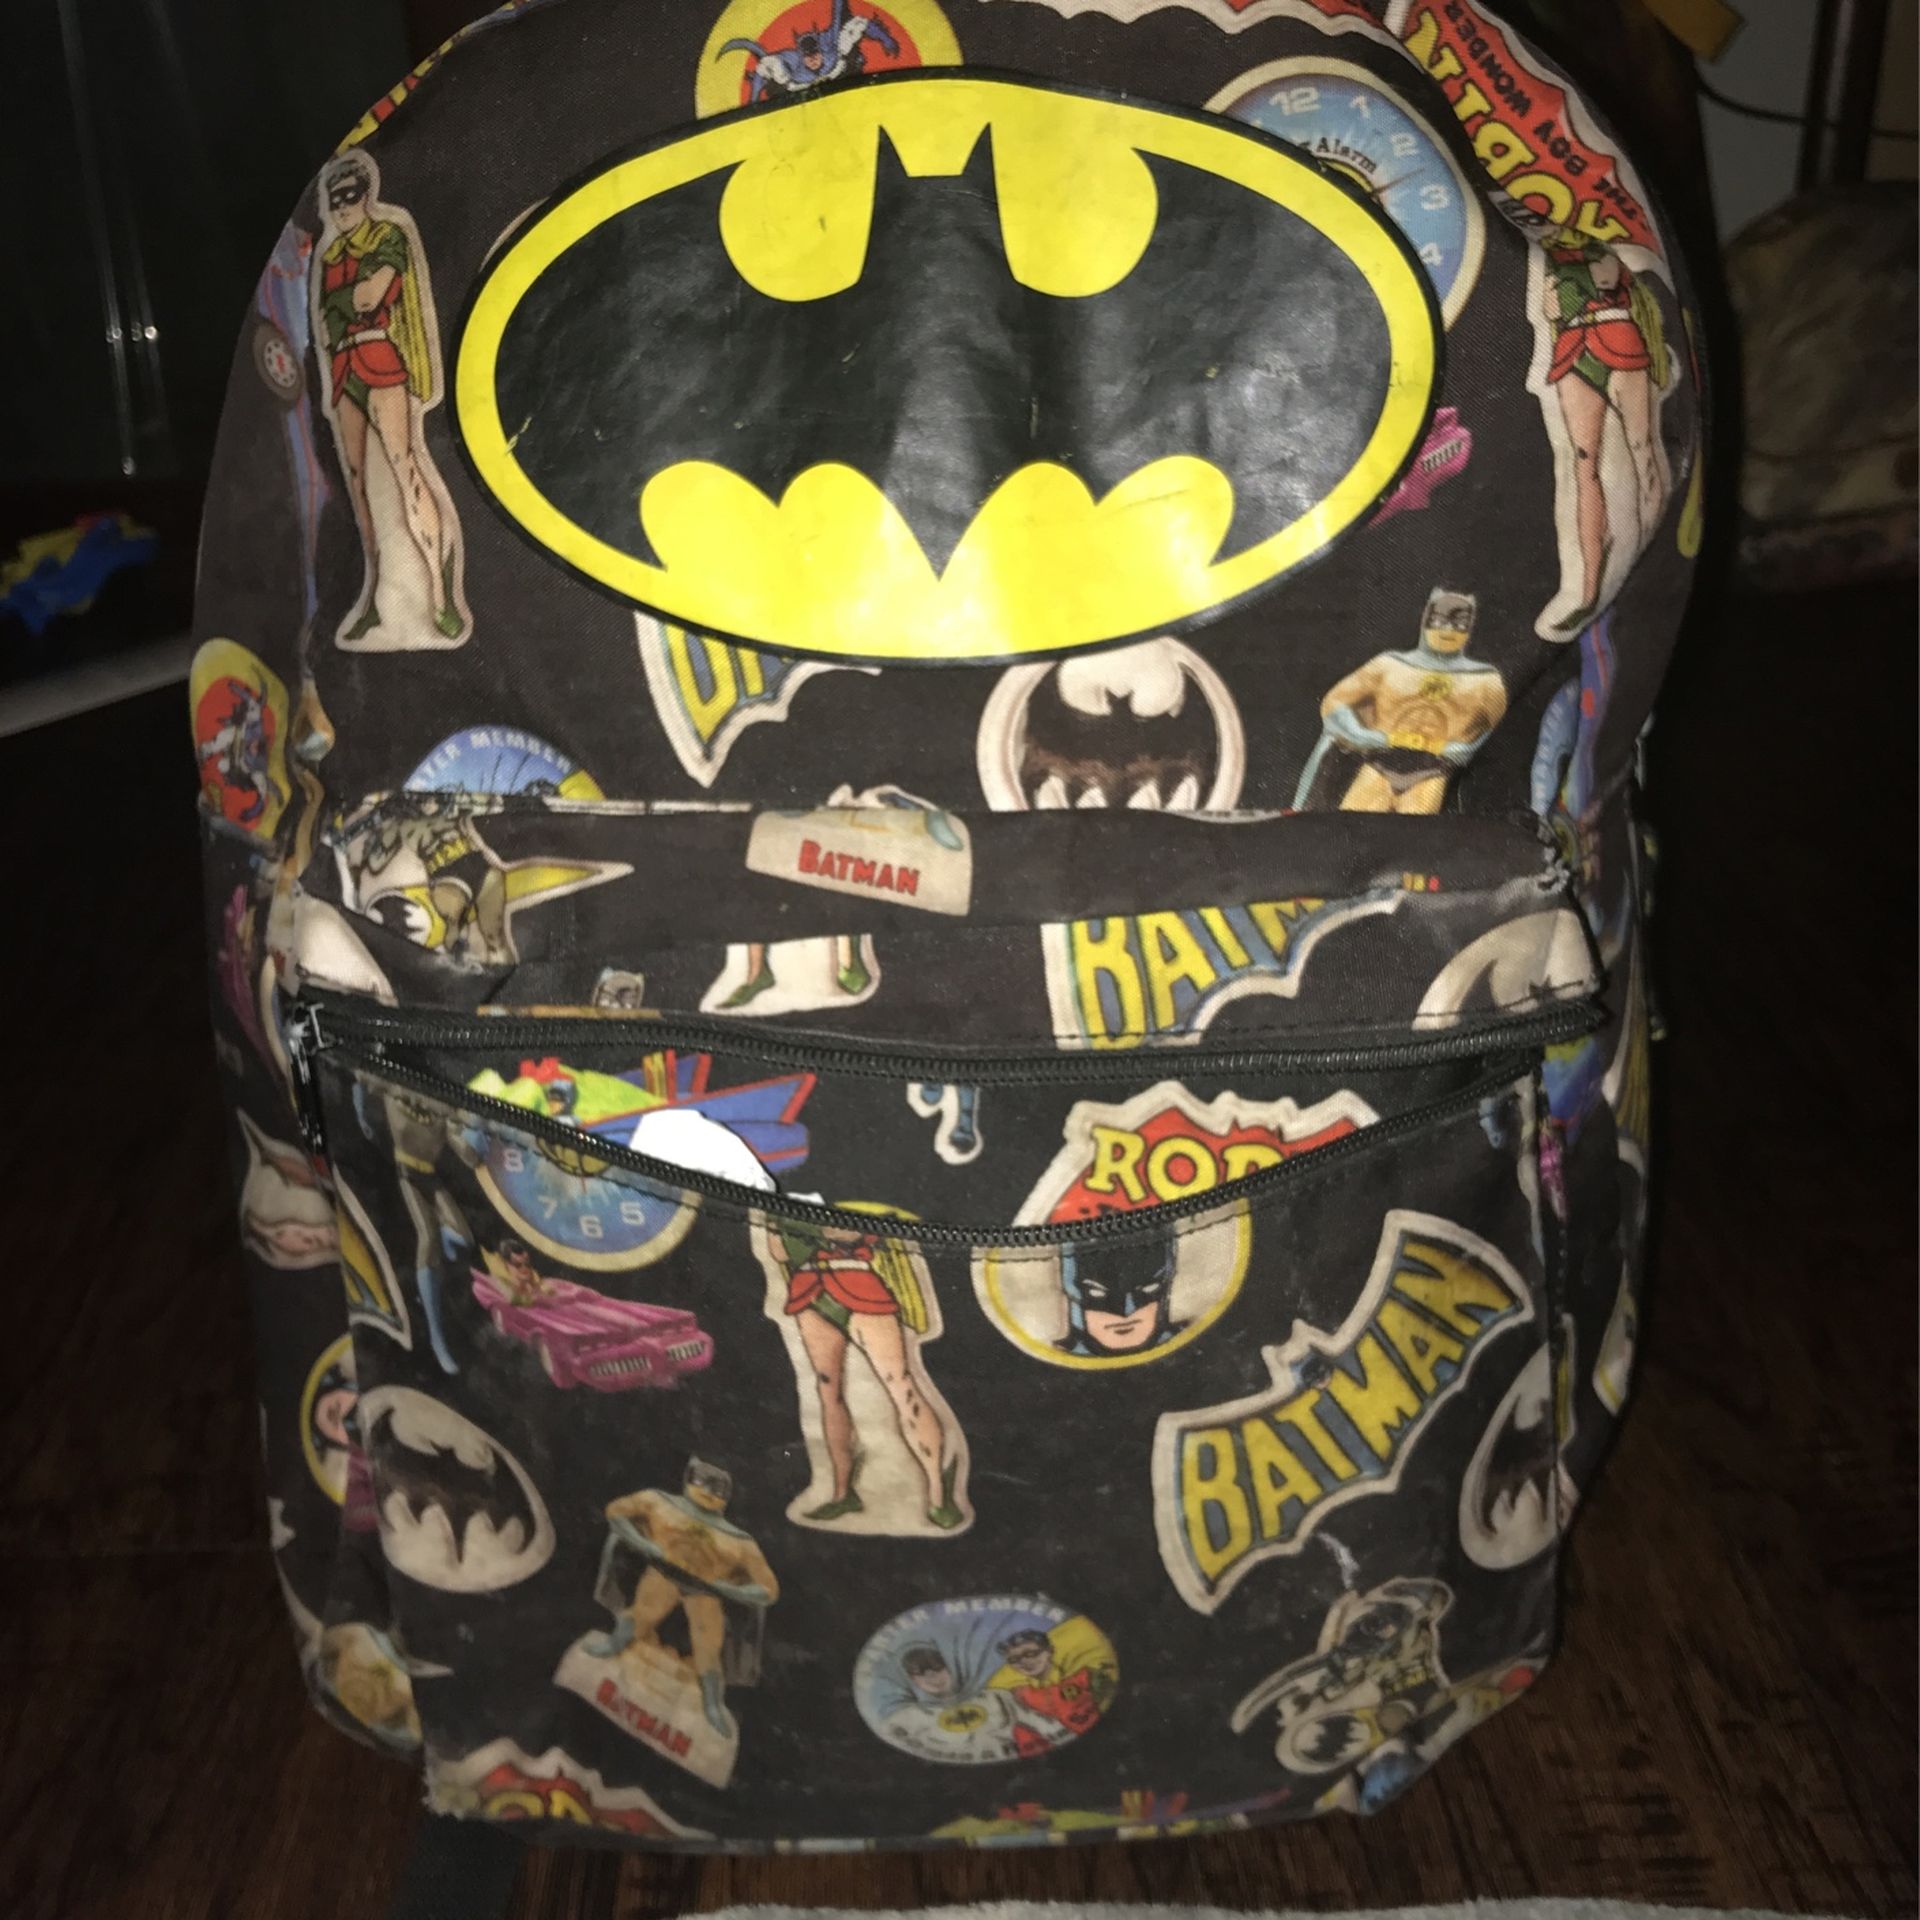 Batman Backpack 